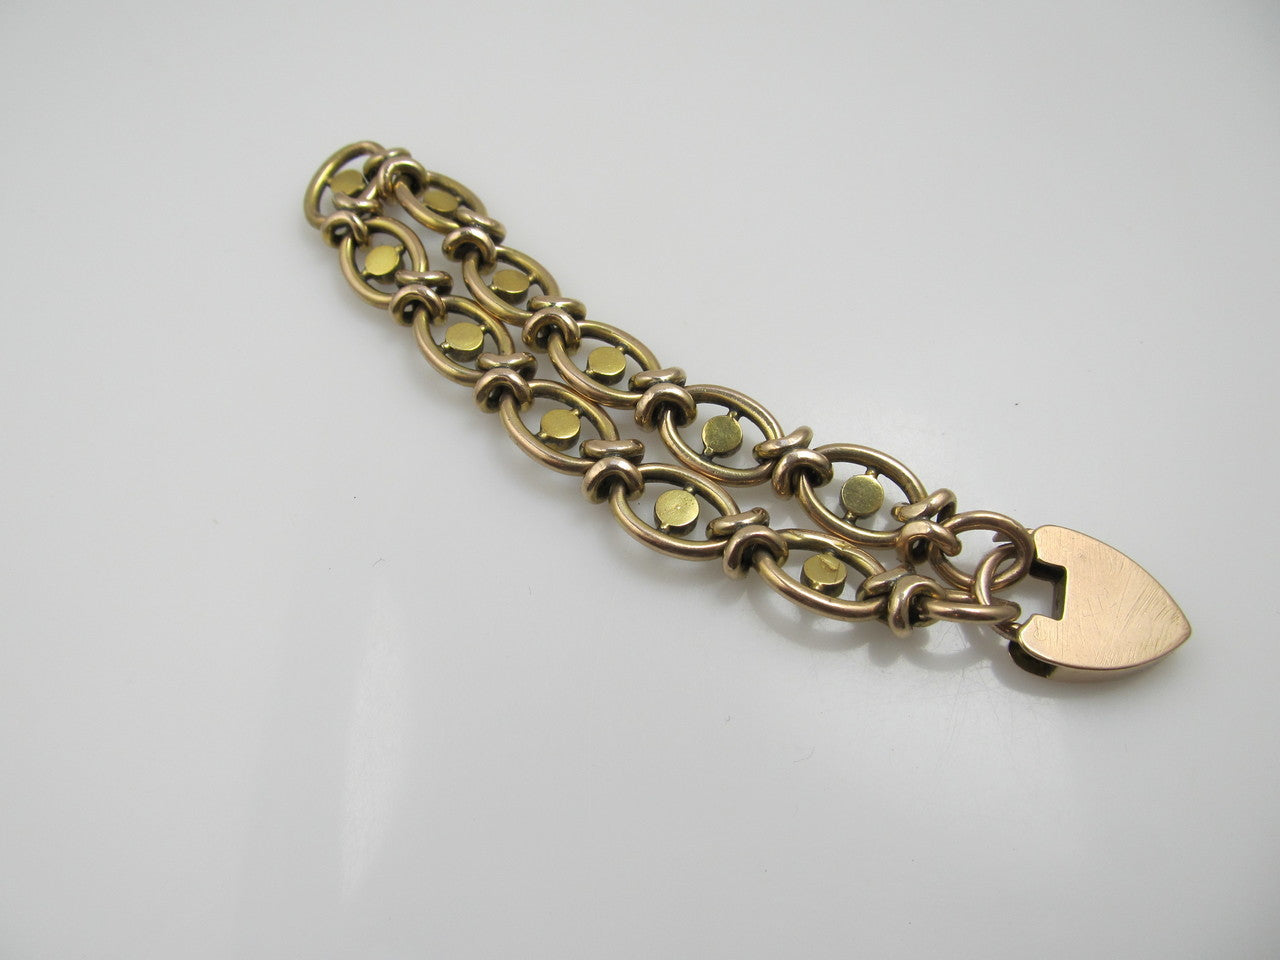 Antique natural turquoise padlock bracelet, 9kt yellow gold